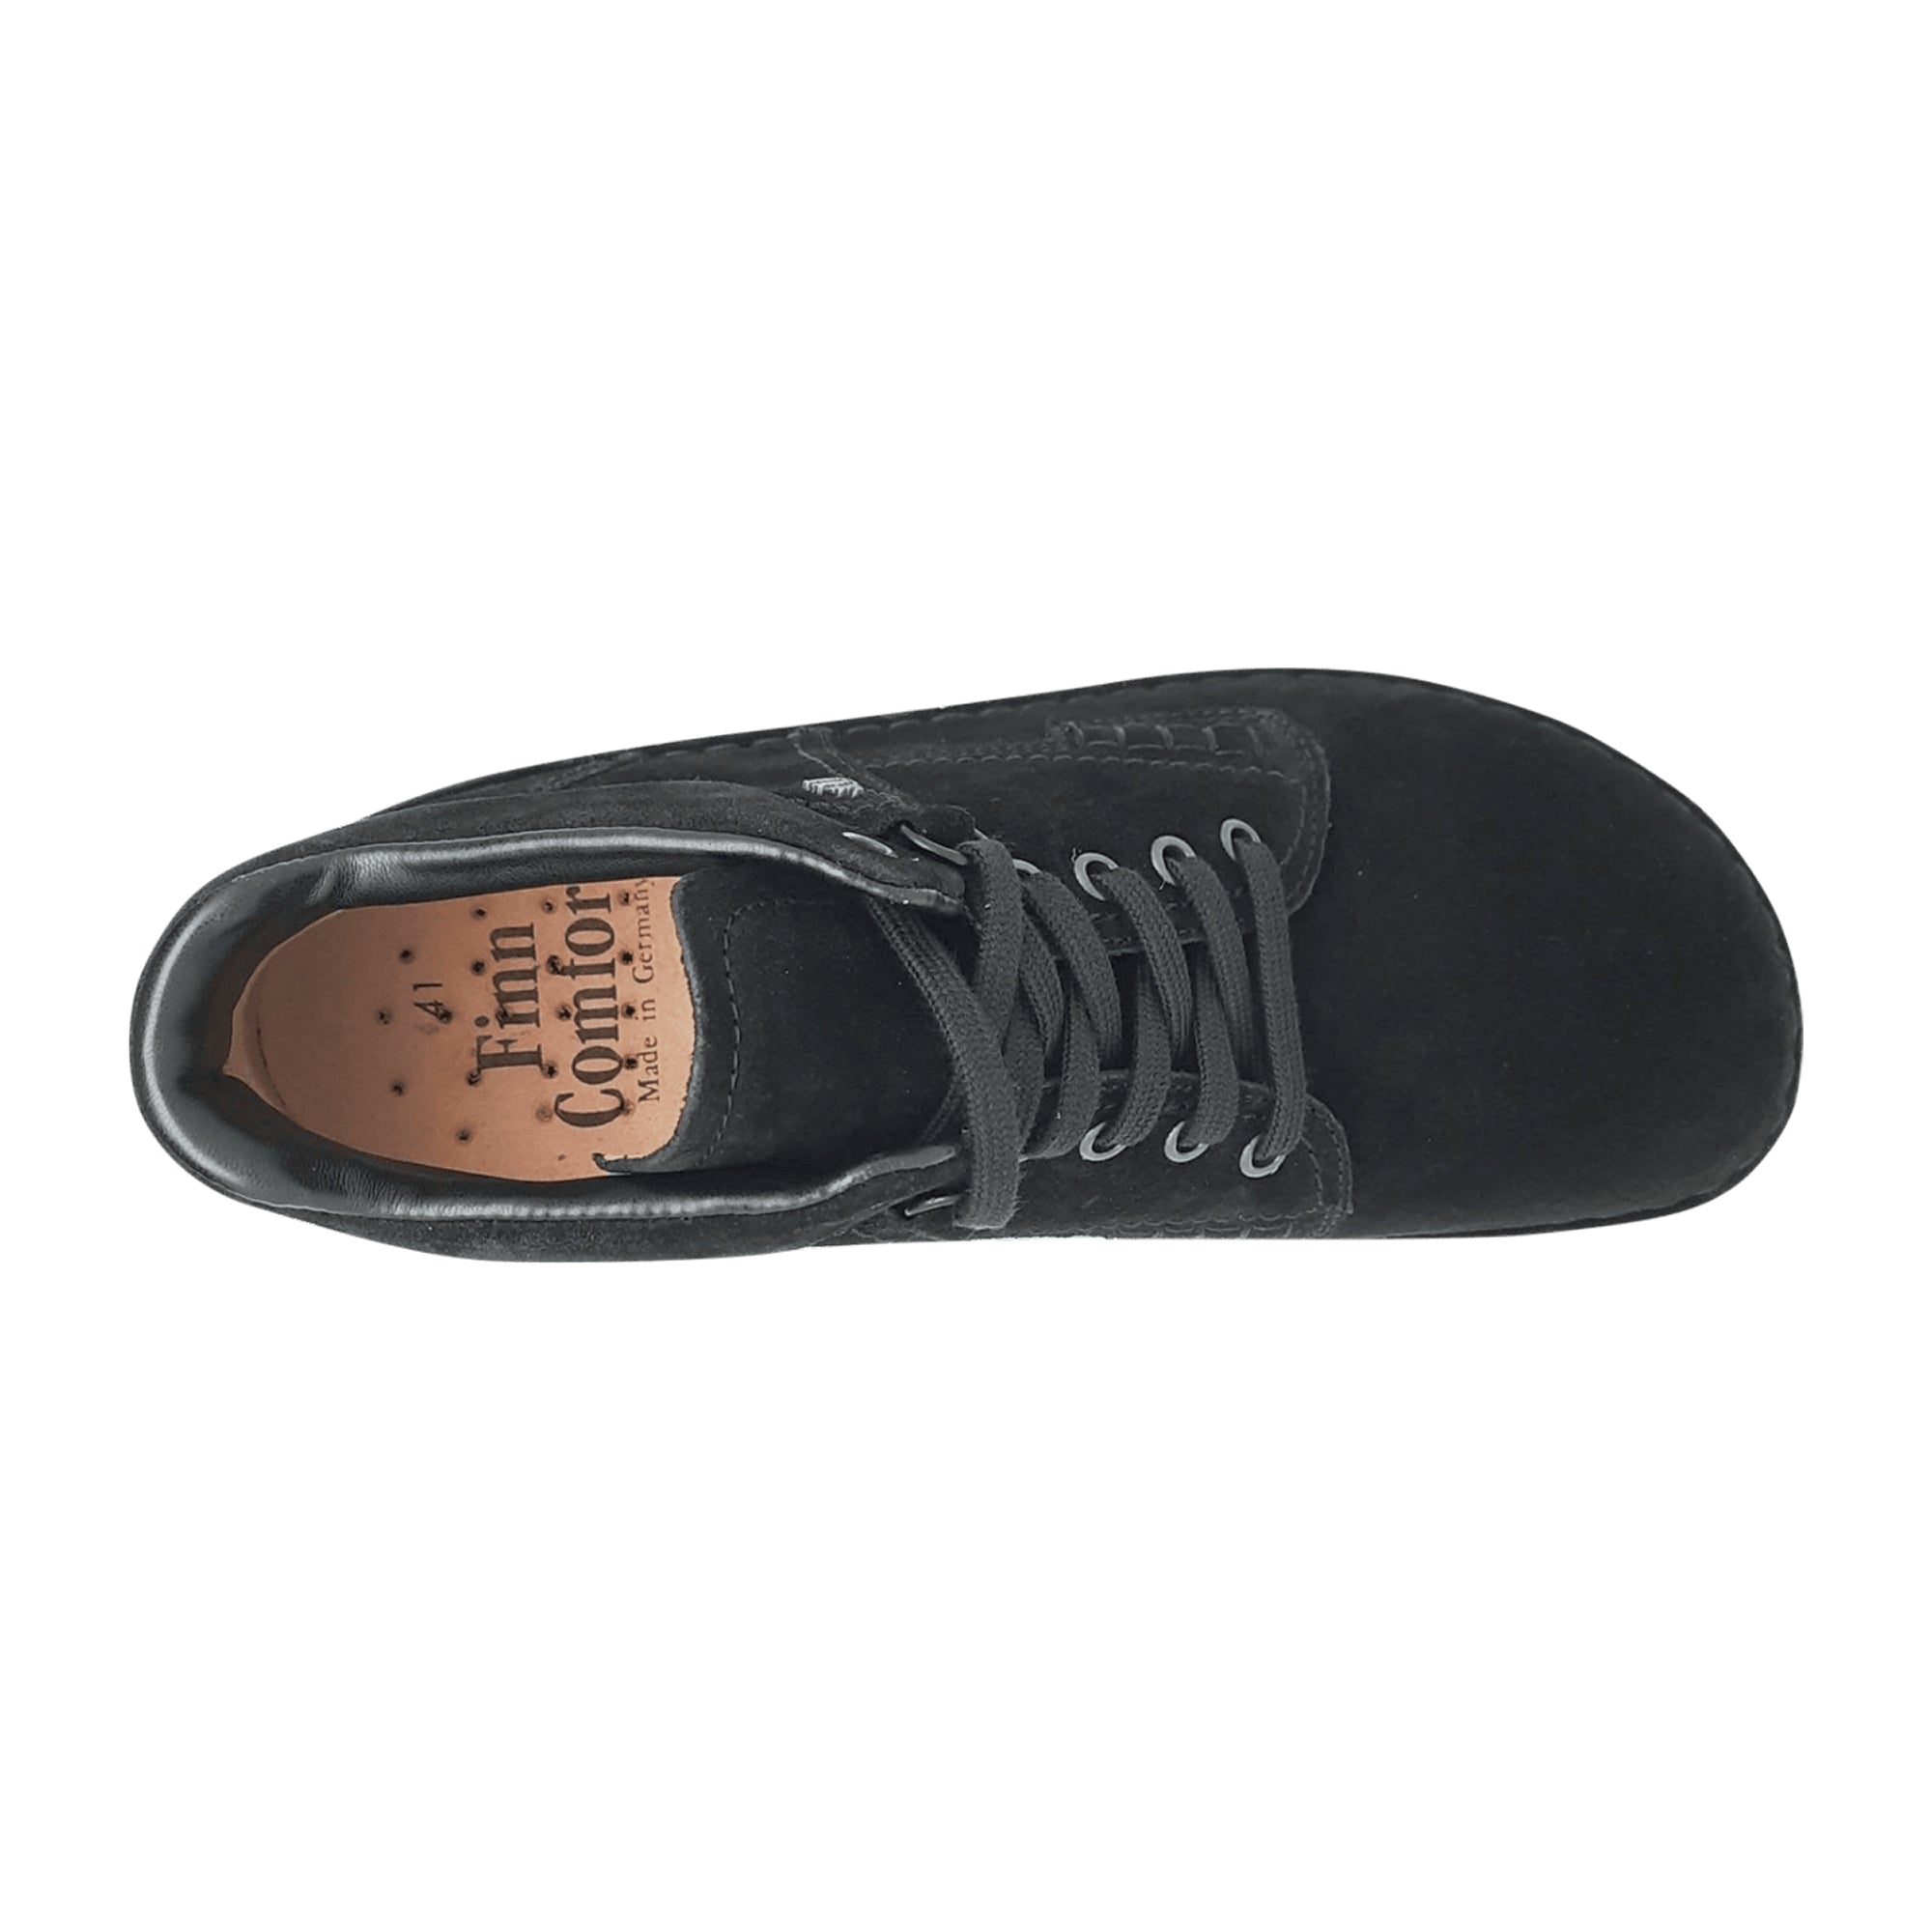 Finn Comfort Men's 01008 Stylish Black Comfort Shoes